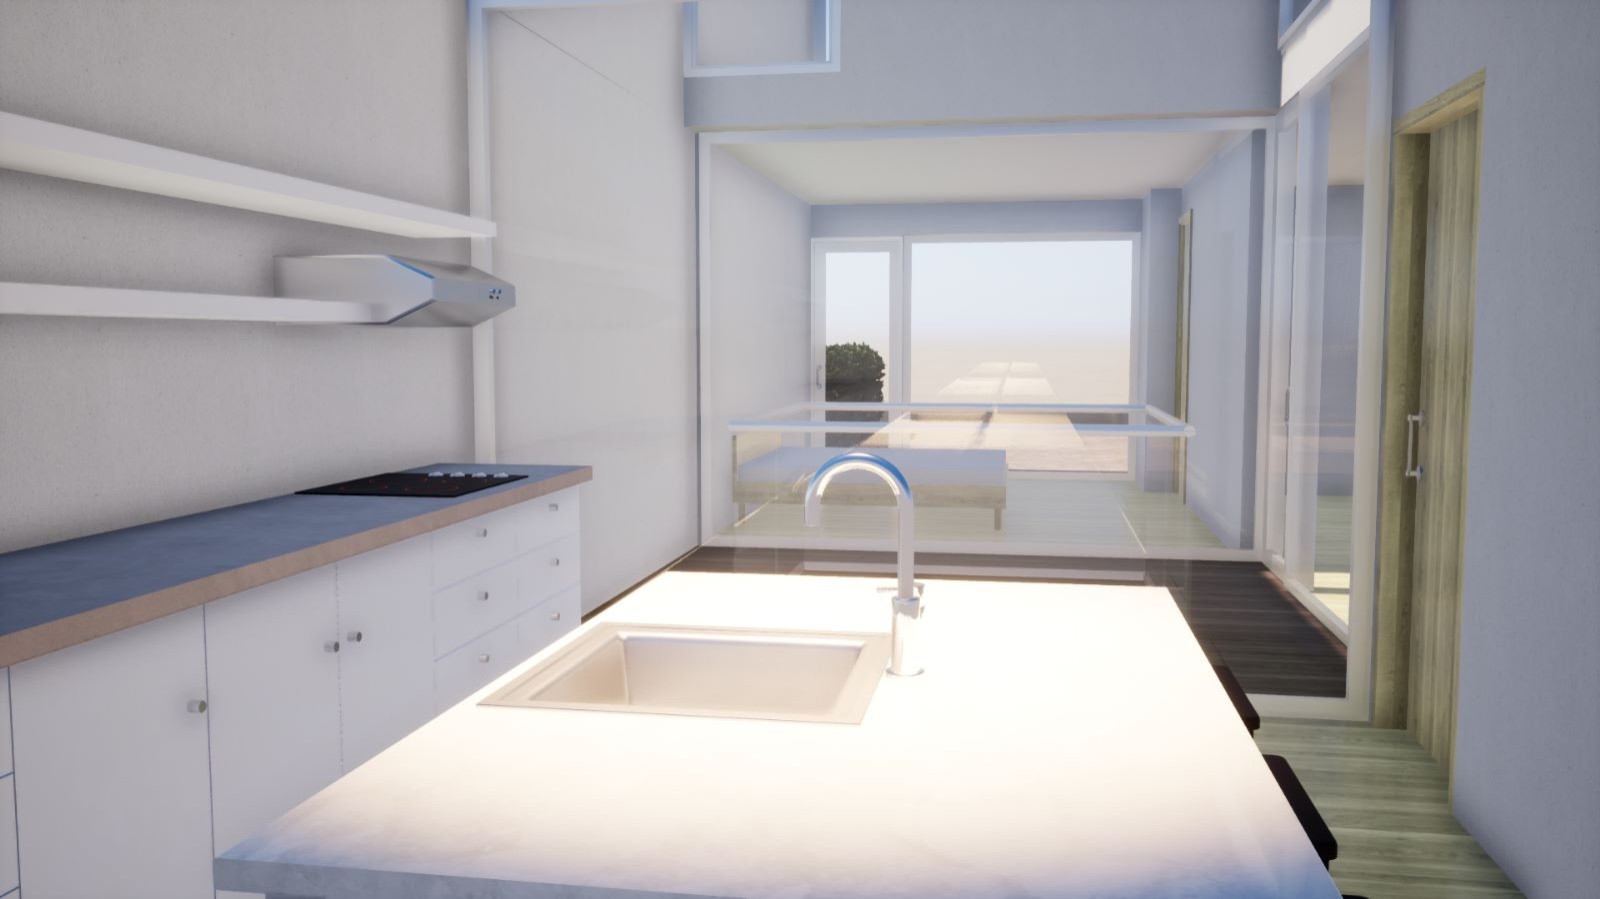 4 bedroom villa, new construction with seaview, for sale in Tavira, Algarve_227991